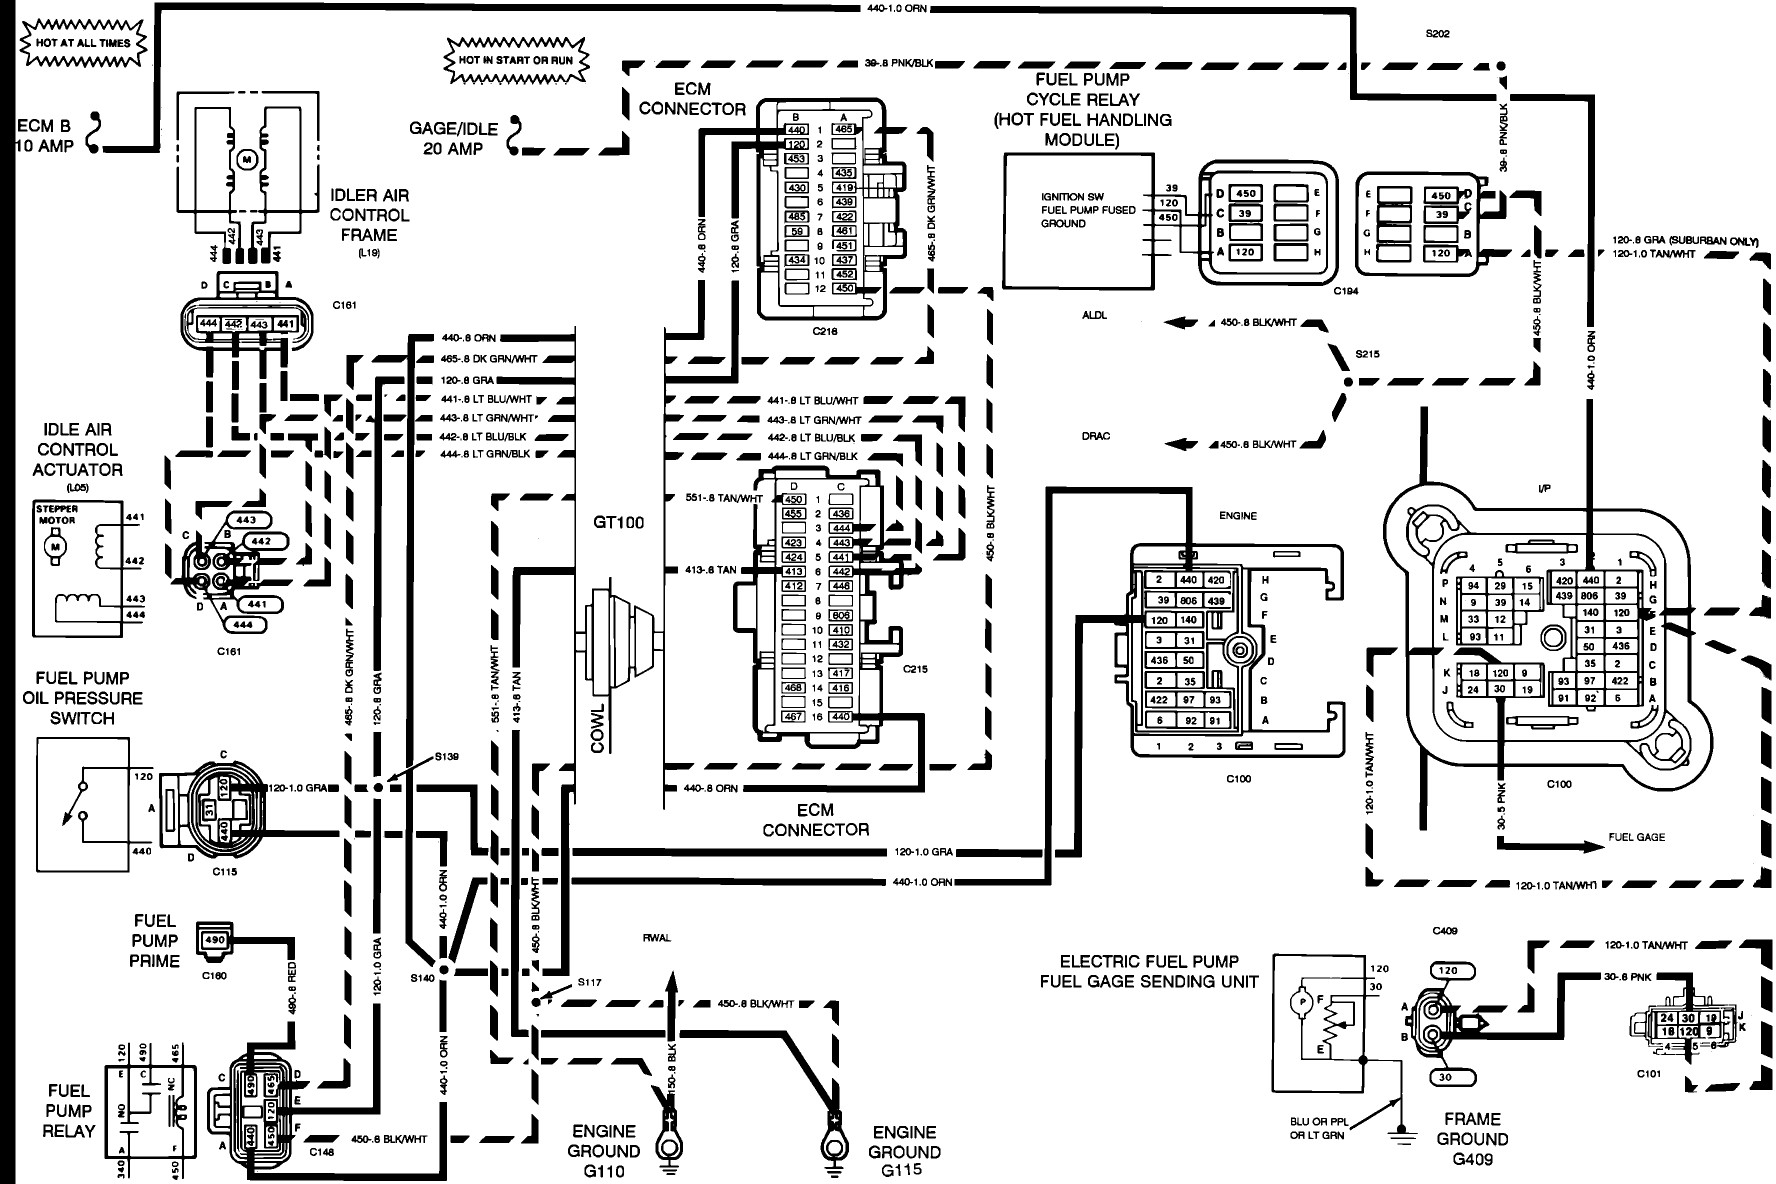 1995 fleetwood southwind rv wiring diagram wiring diagram motor home wiring diagram 1990 1990 fleetwood motorhome